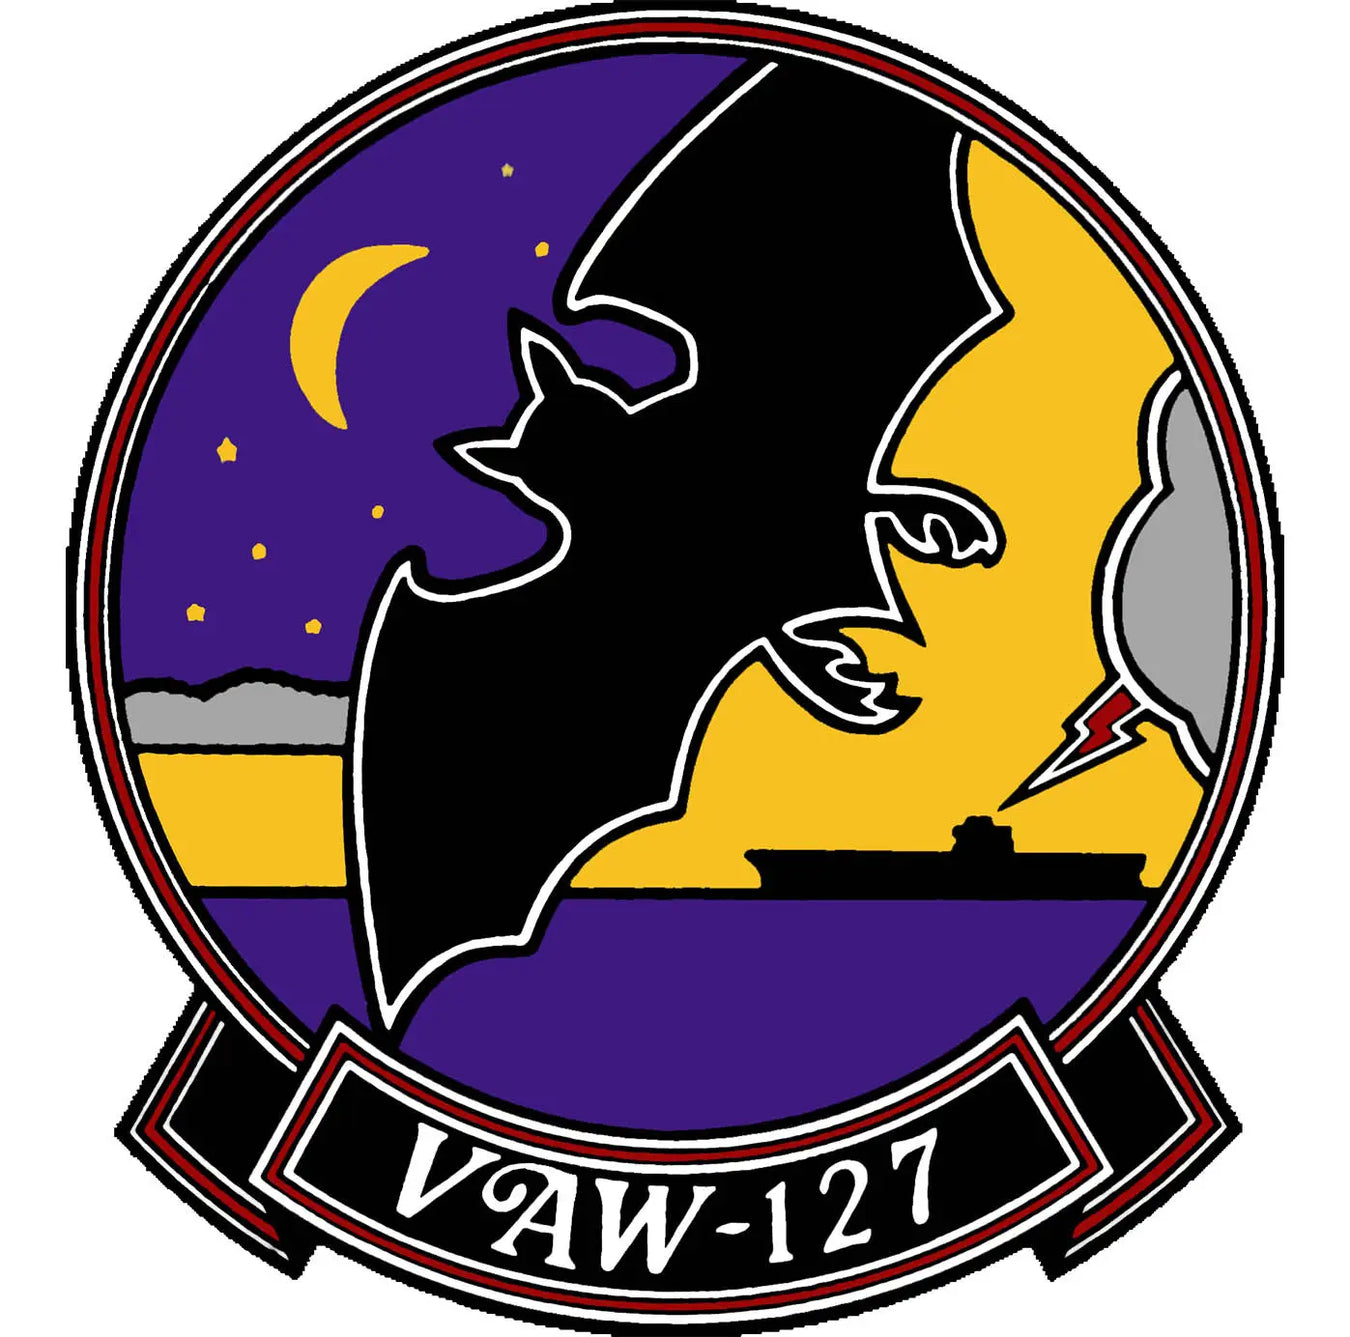 Airborne Command & Control Squadron 127 (VAW-127)